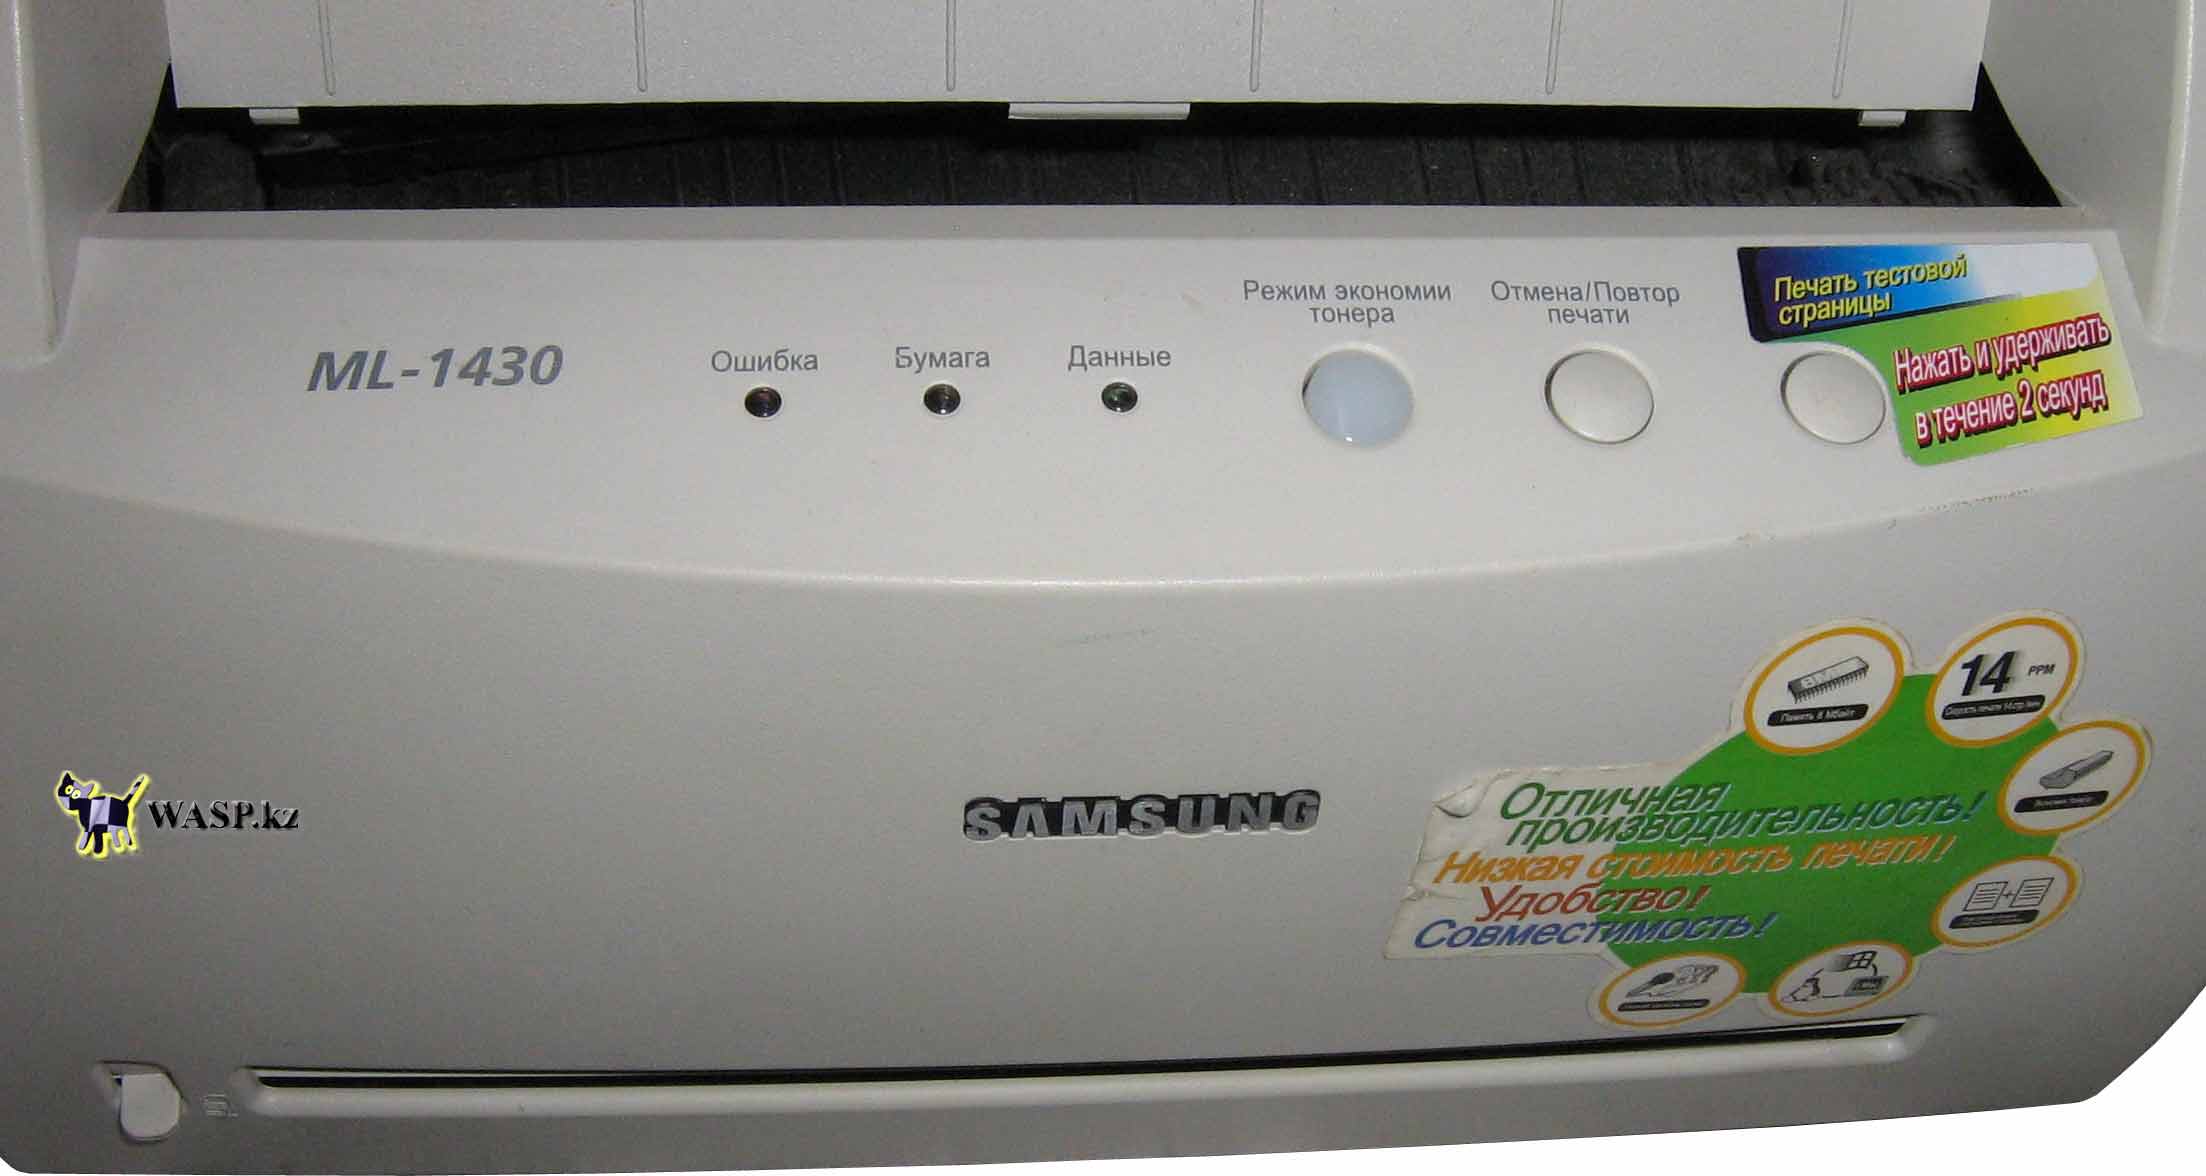 Samsung ML-1430 лазерный принтер